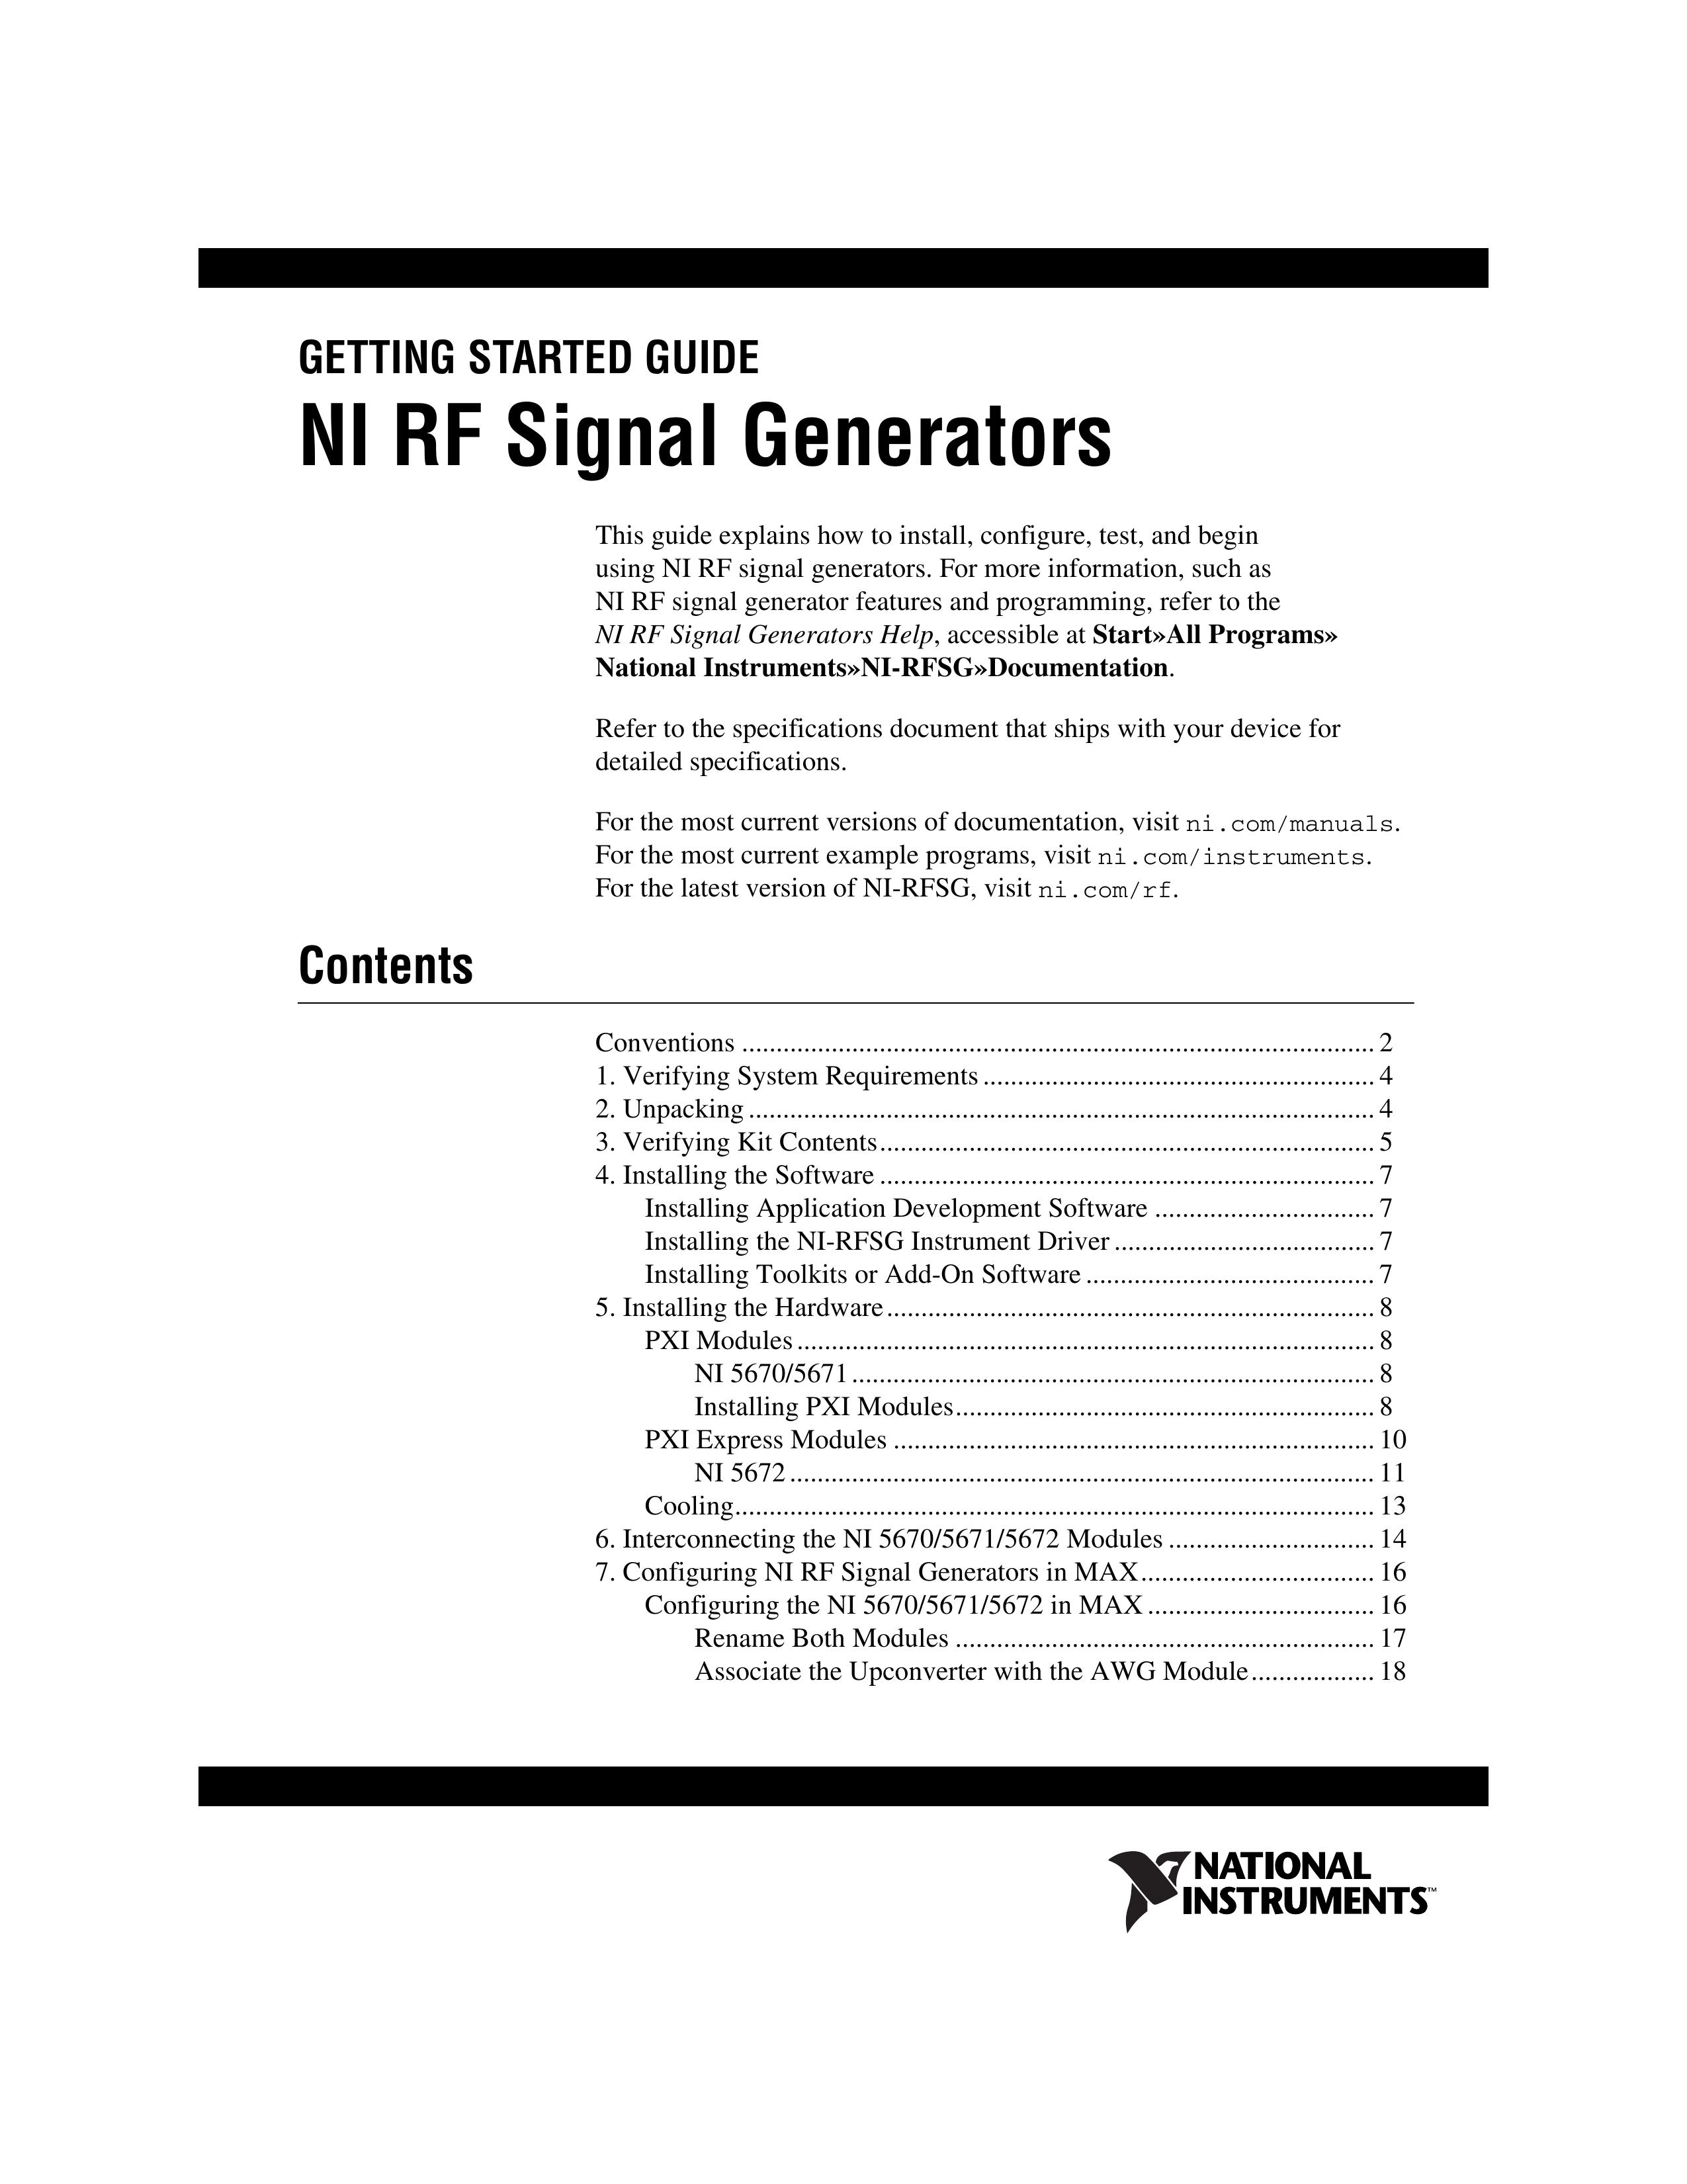 National Instruments NI 5671 Portable Generator User Manual